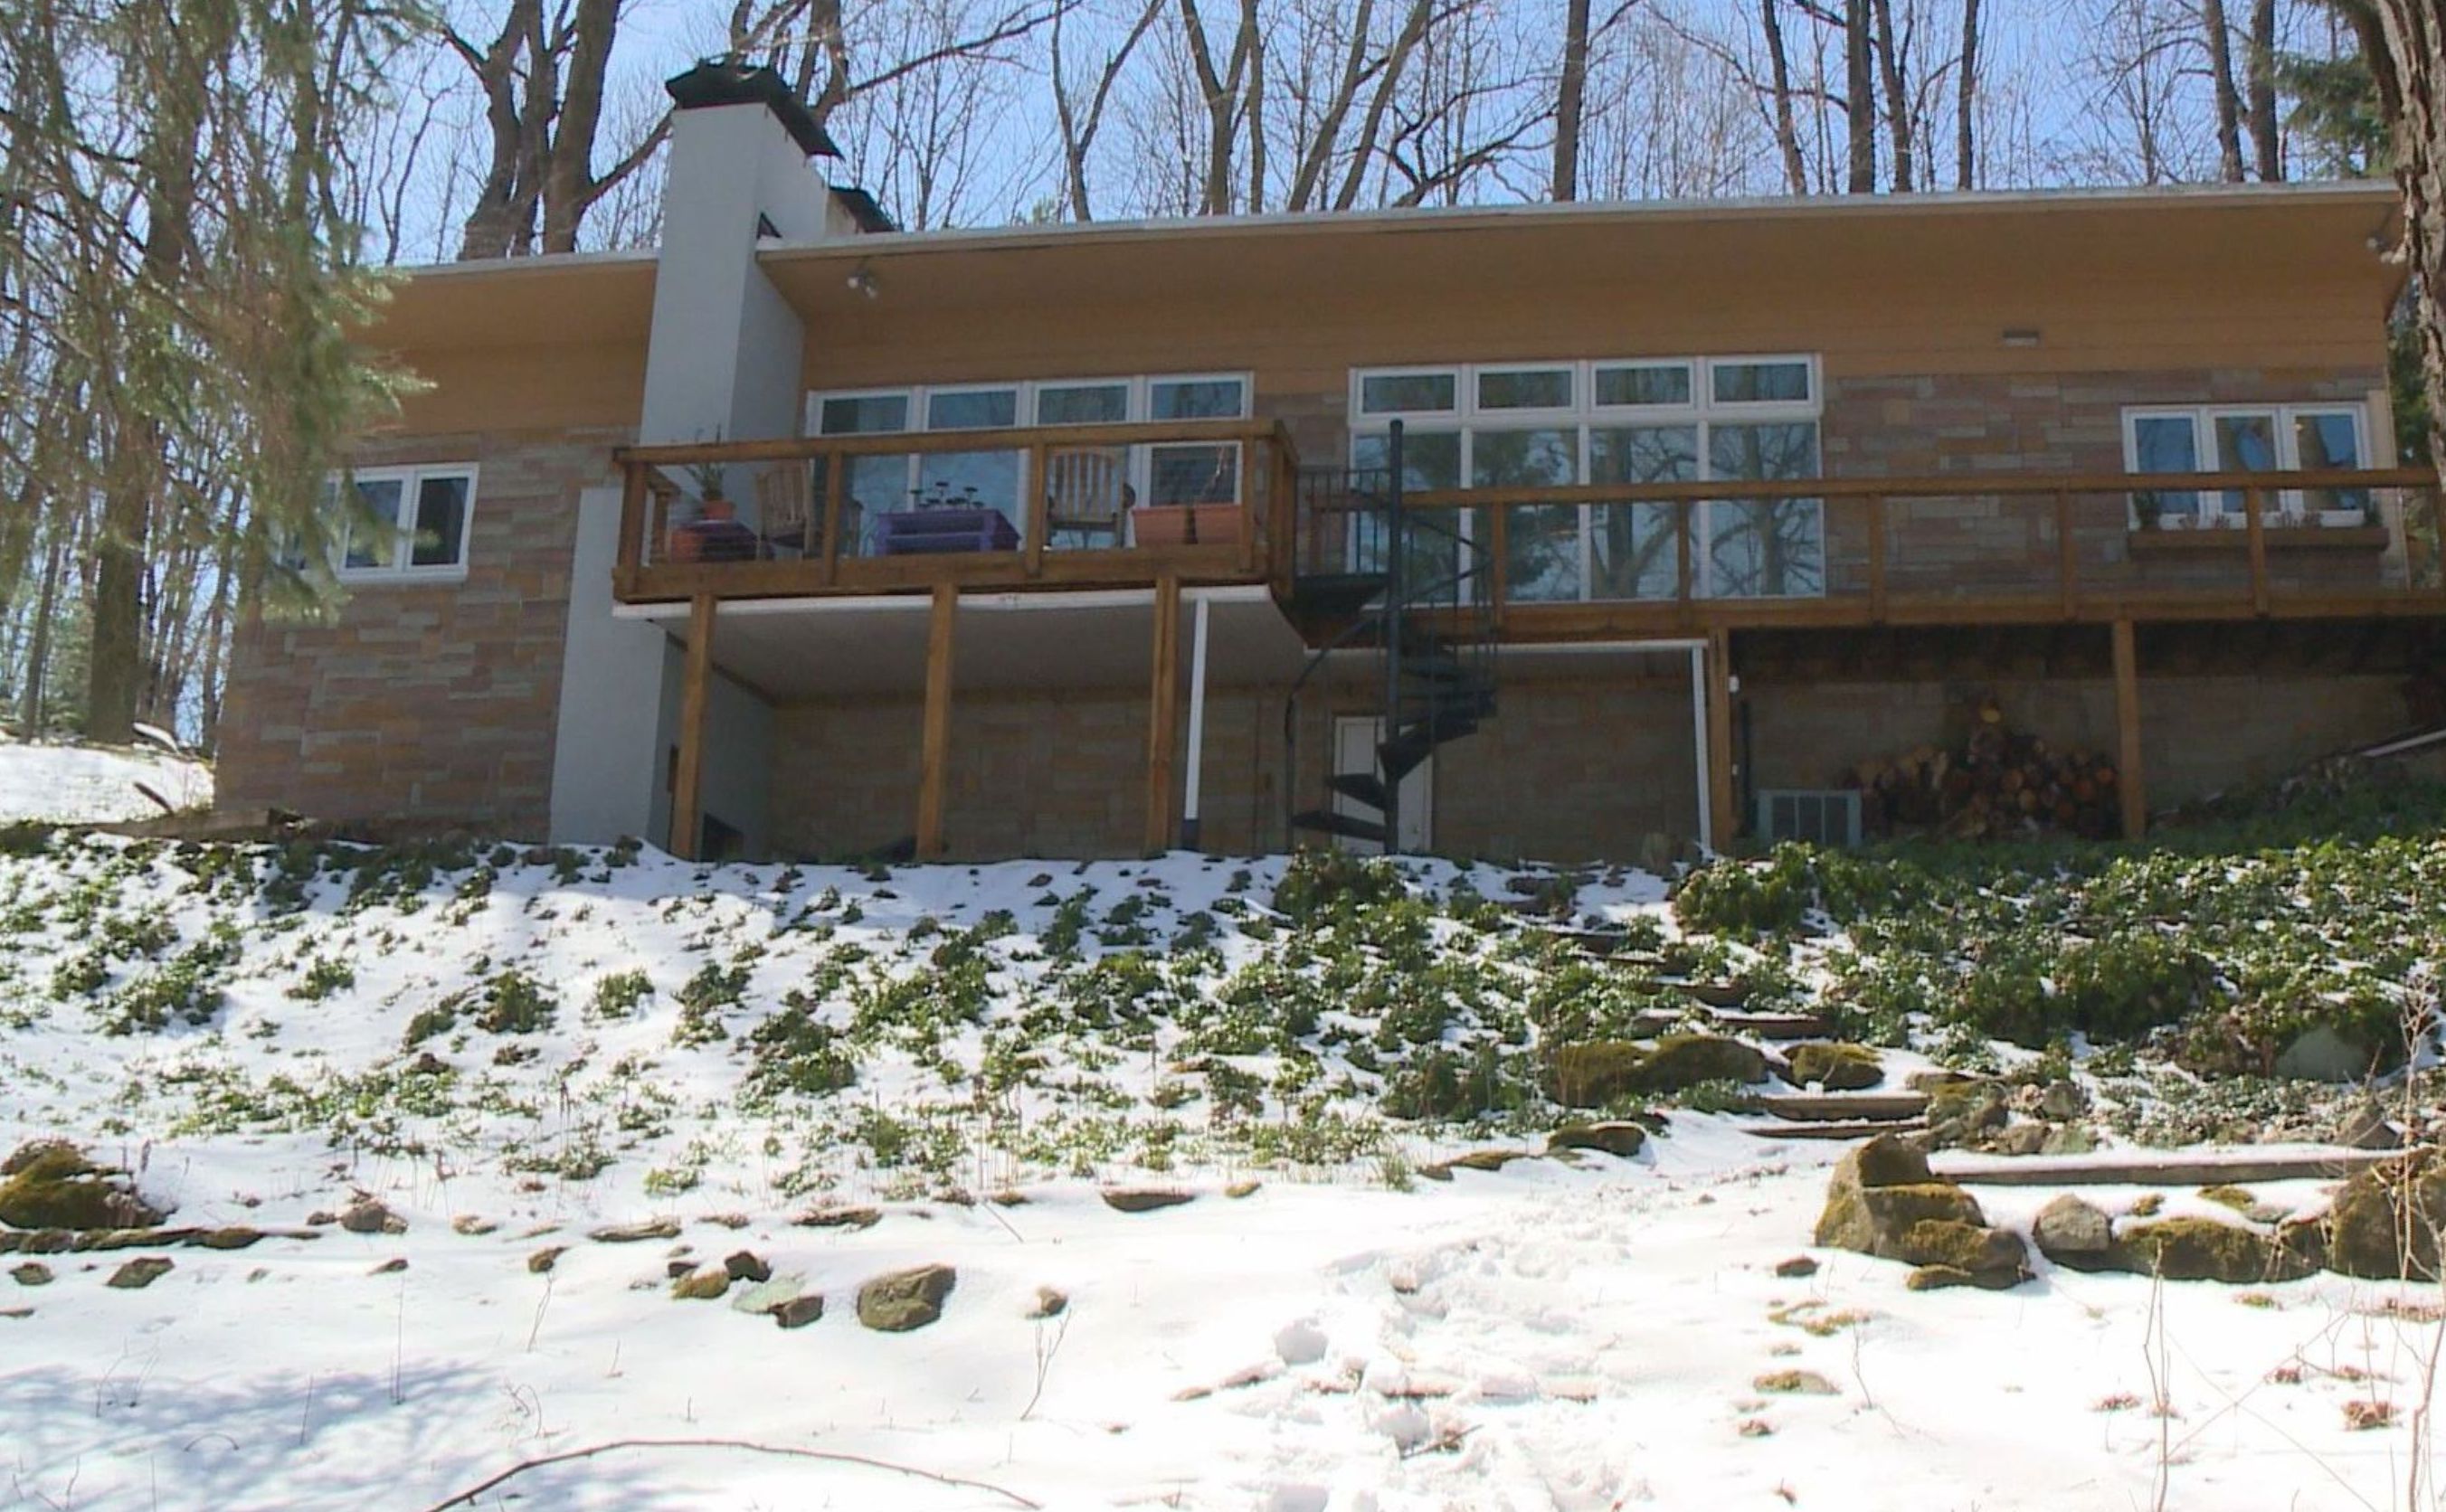 Jeffrey Dahmer childhood home